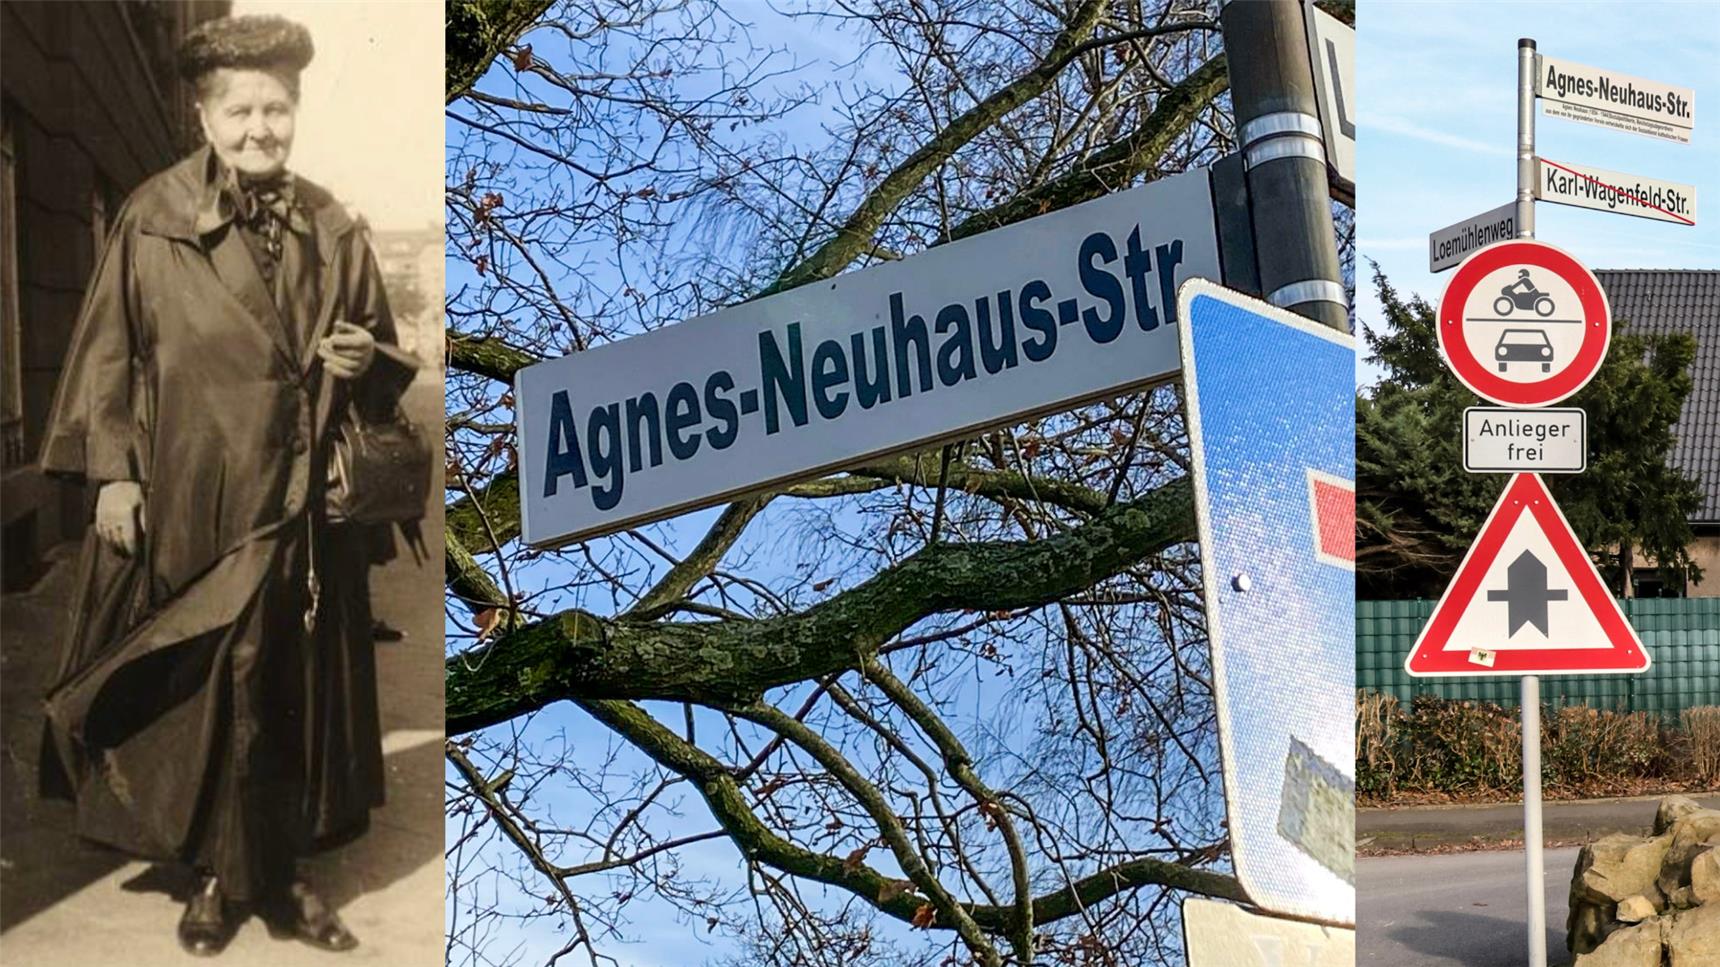 Agnes-Neuhaus-Straße-Collage